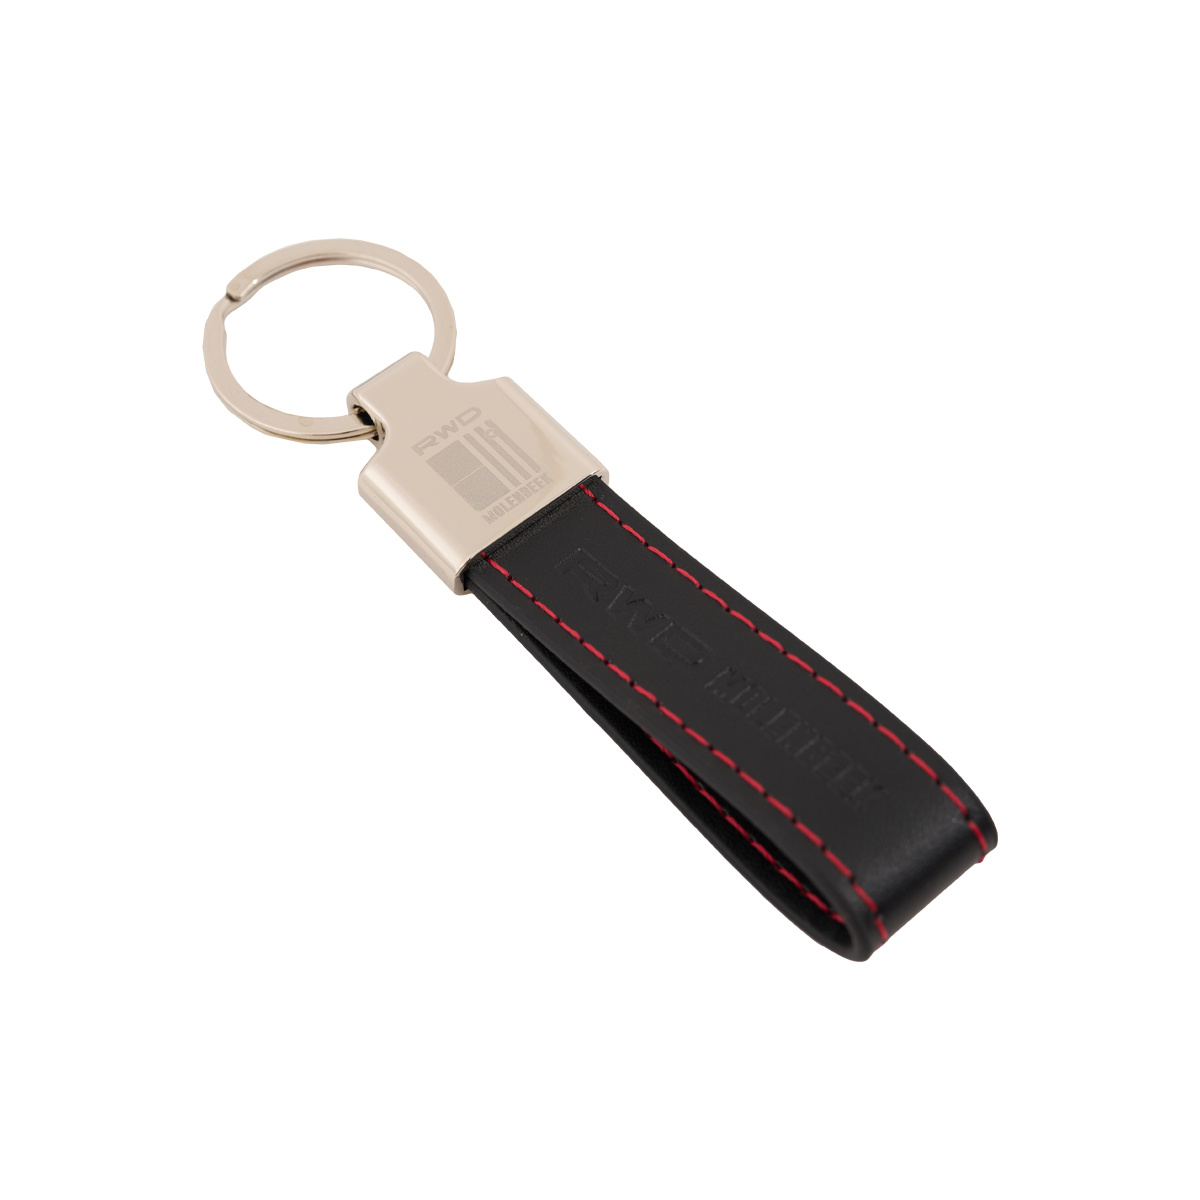 Topfanz Keychain leather strap